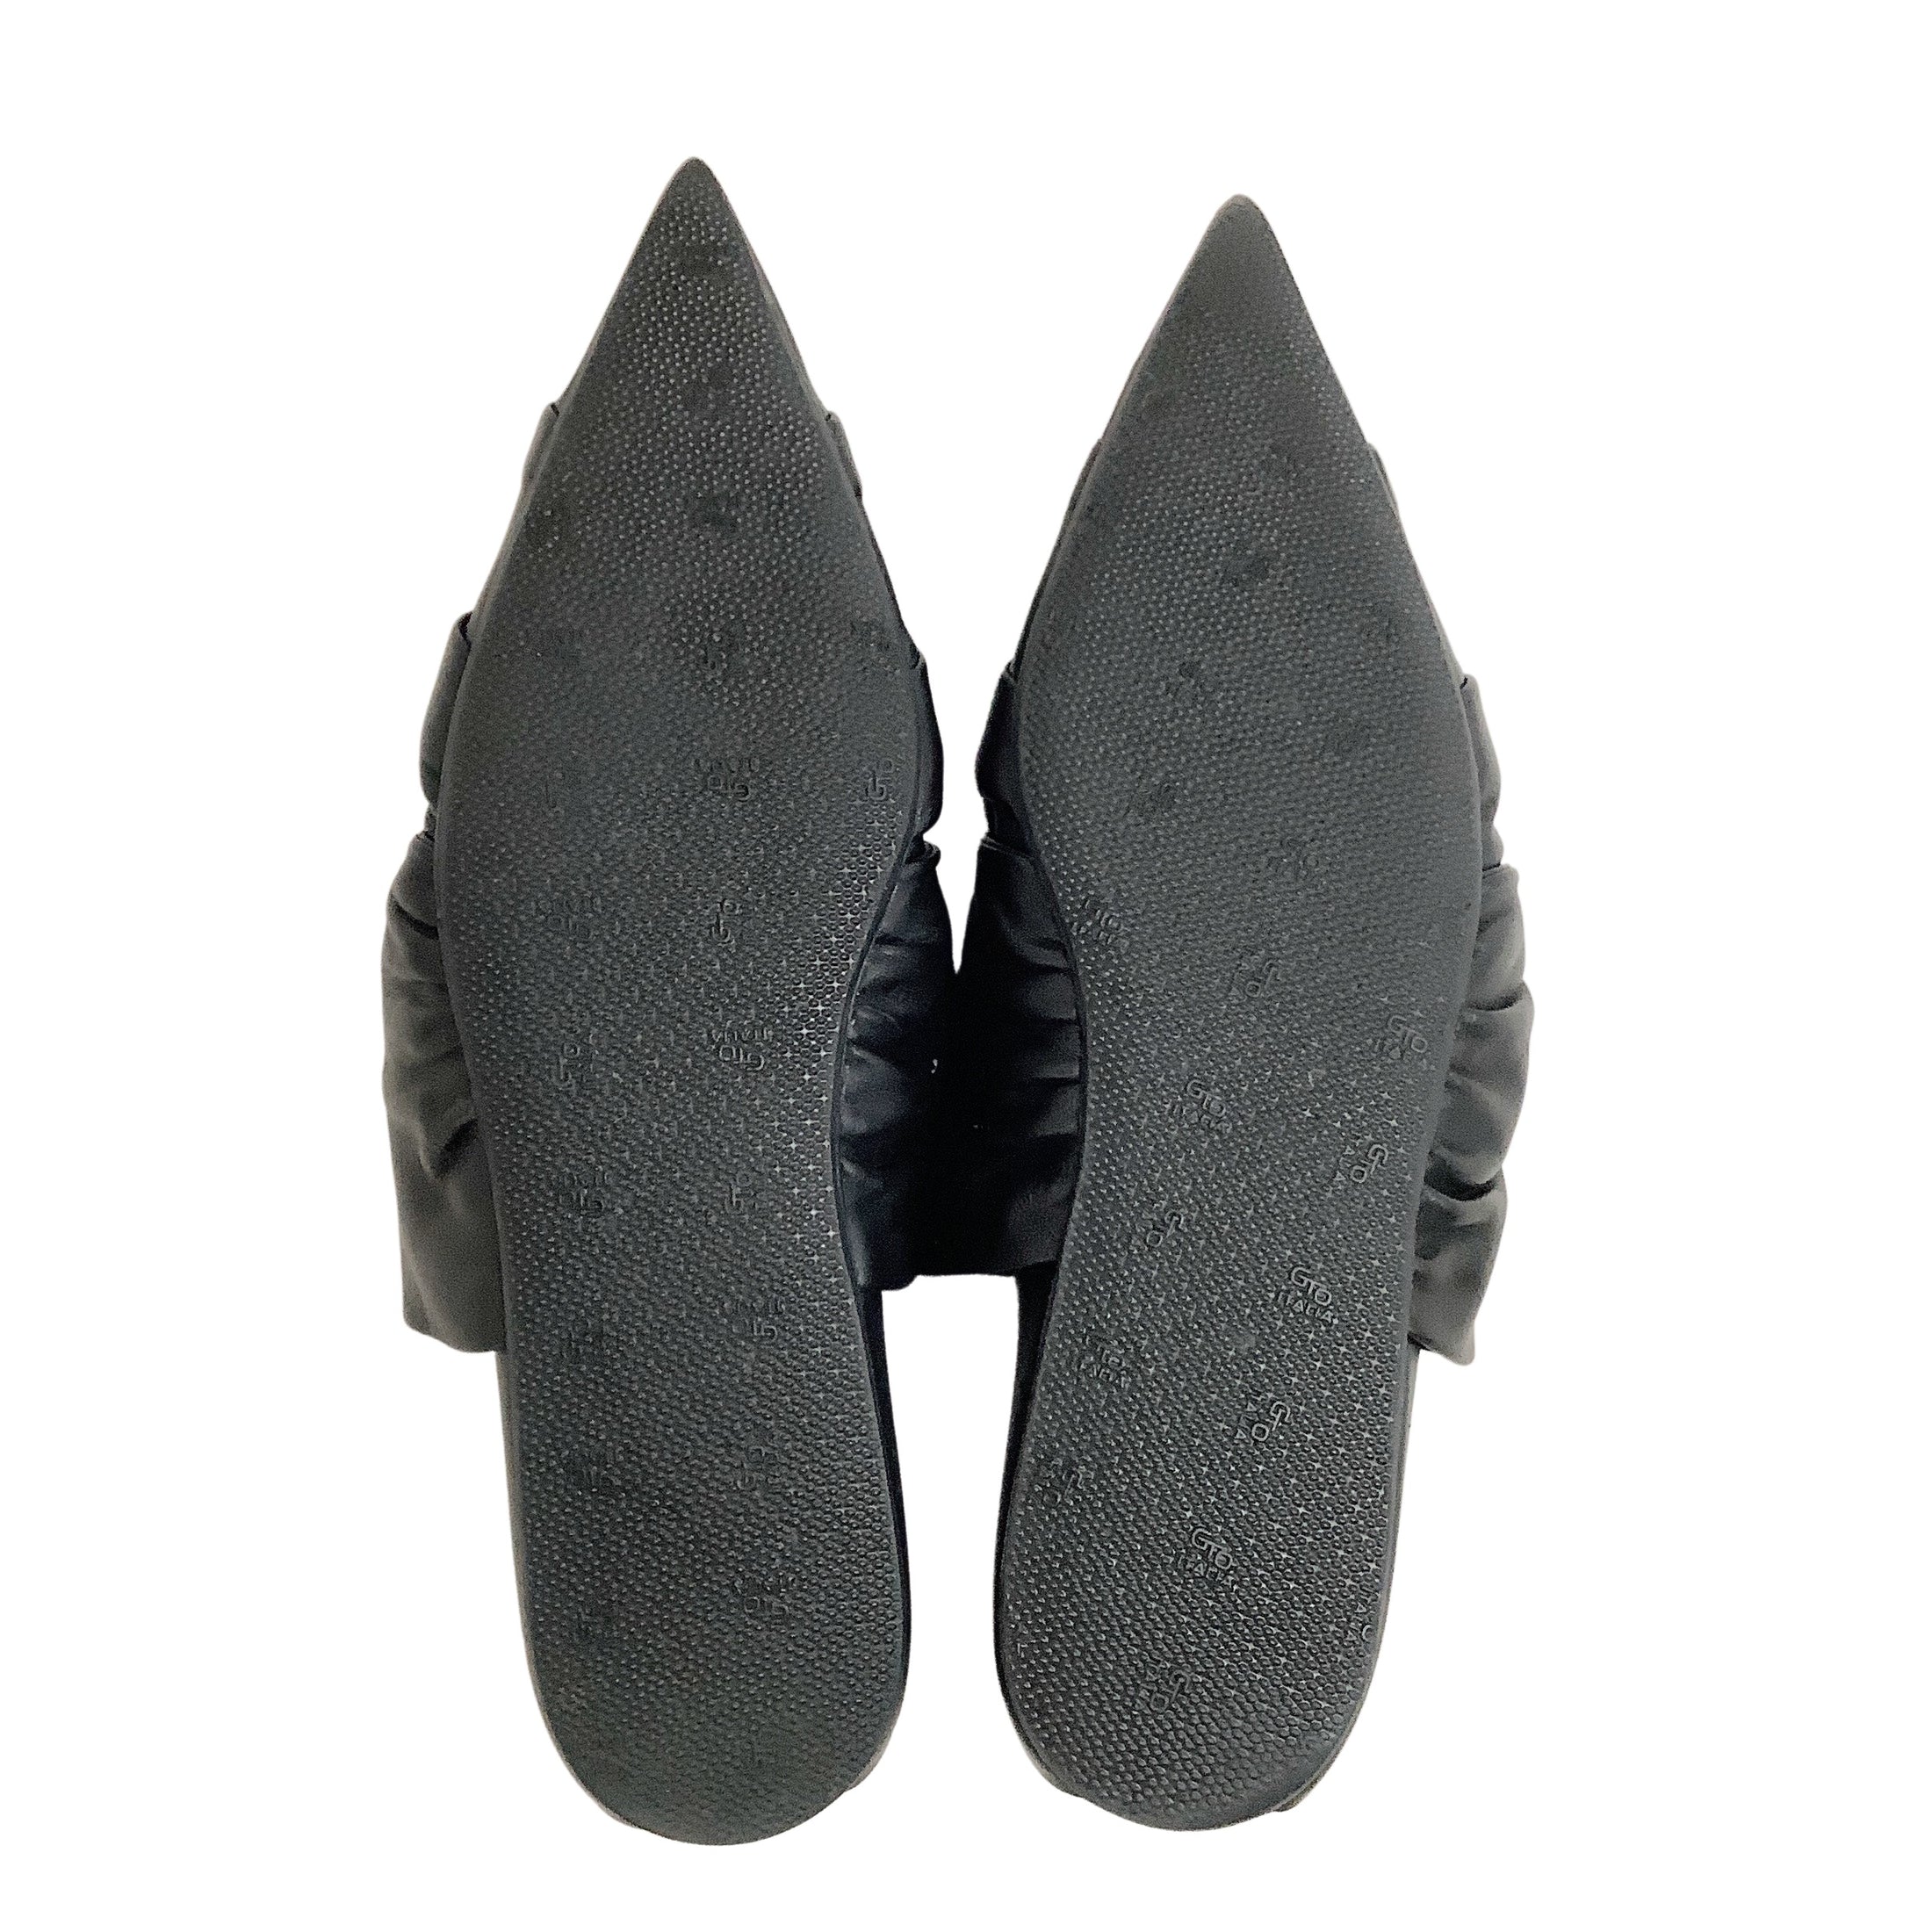 Jil Sander Black Leather Pointed Wrap Loafers